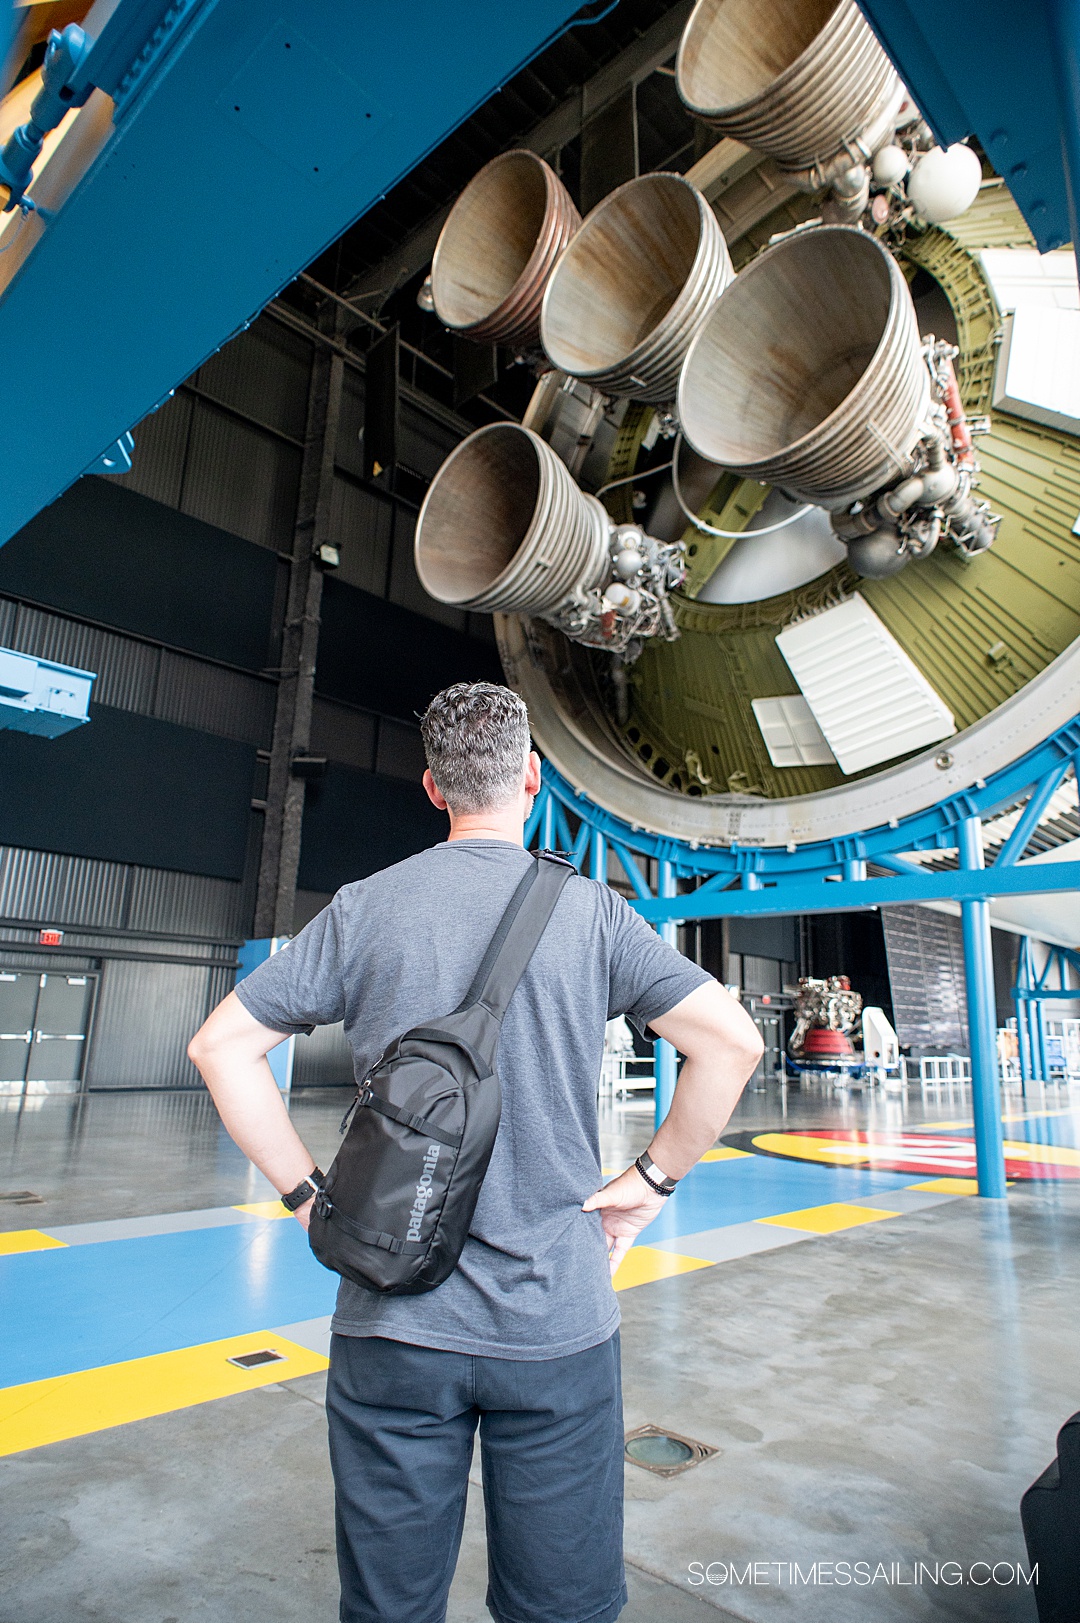 Man looking up at the engine of a Saturn rocket at NASA space center.